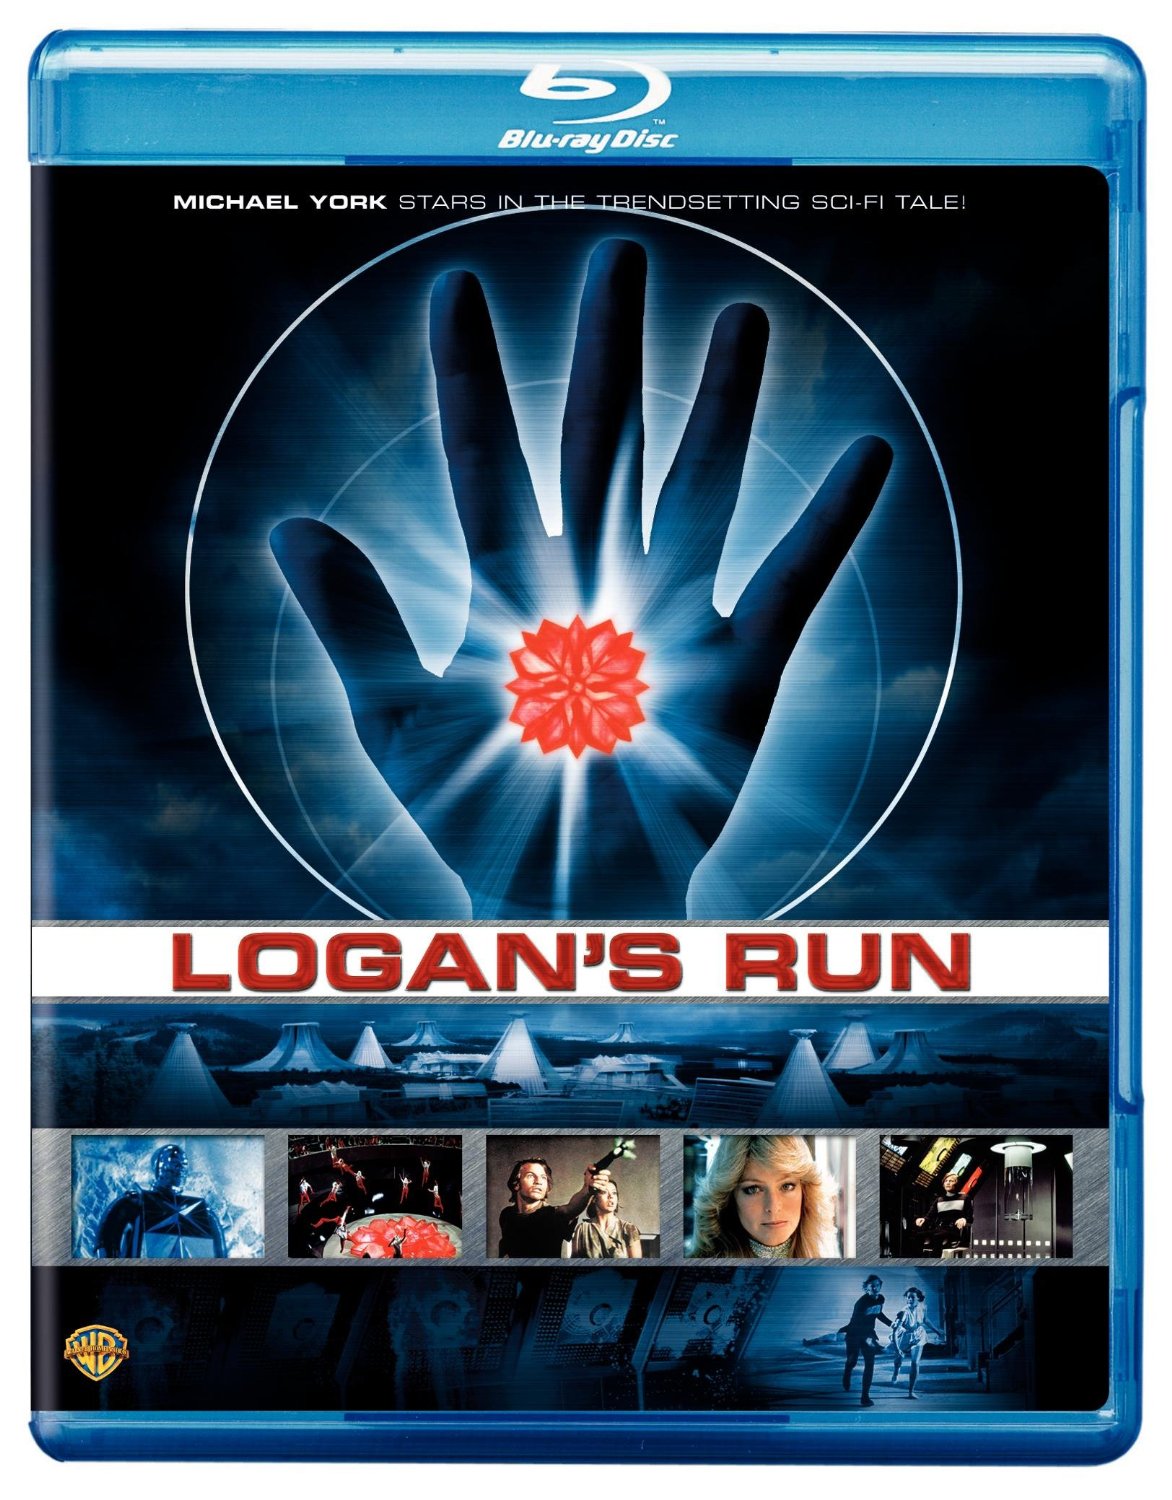 Logan's Run (1976) starring Michael York, Jenny Agutter, Richard Jordan, Peter Ustinov